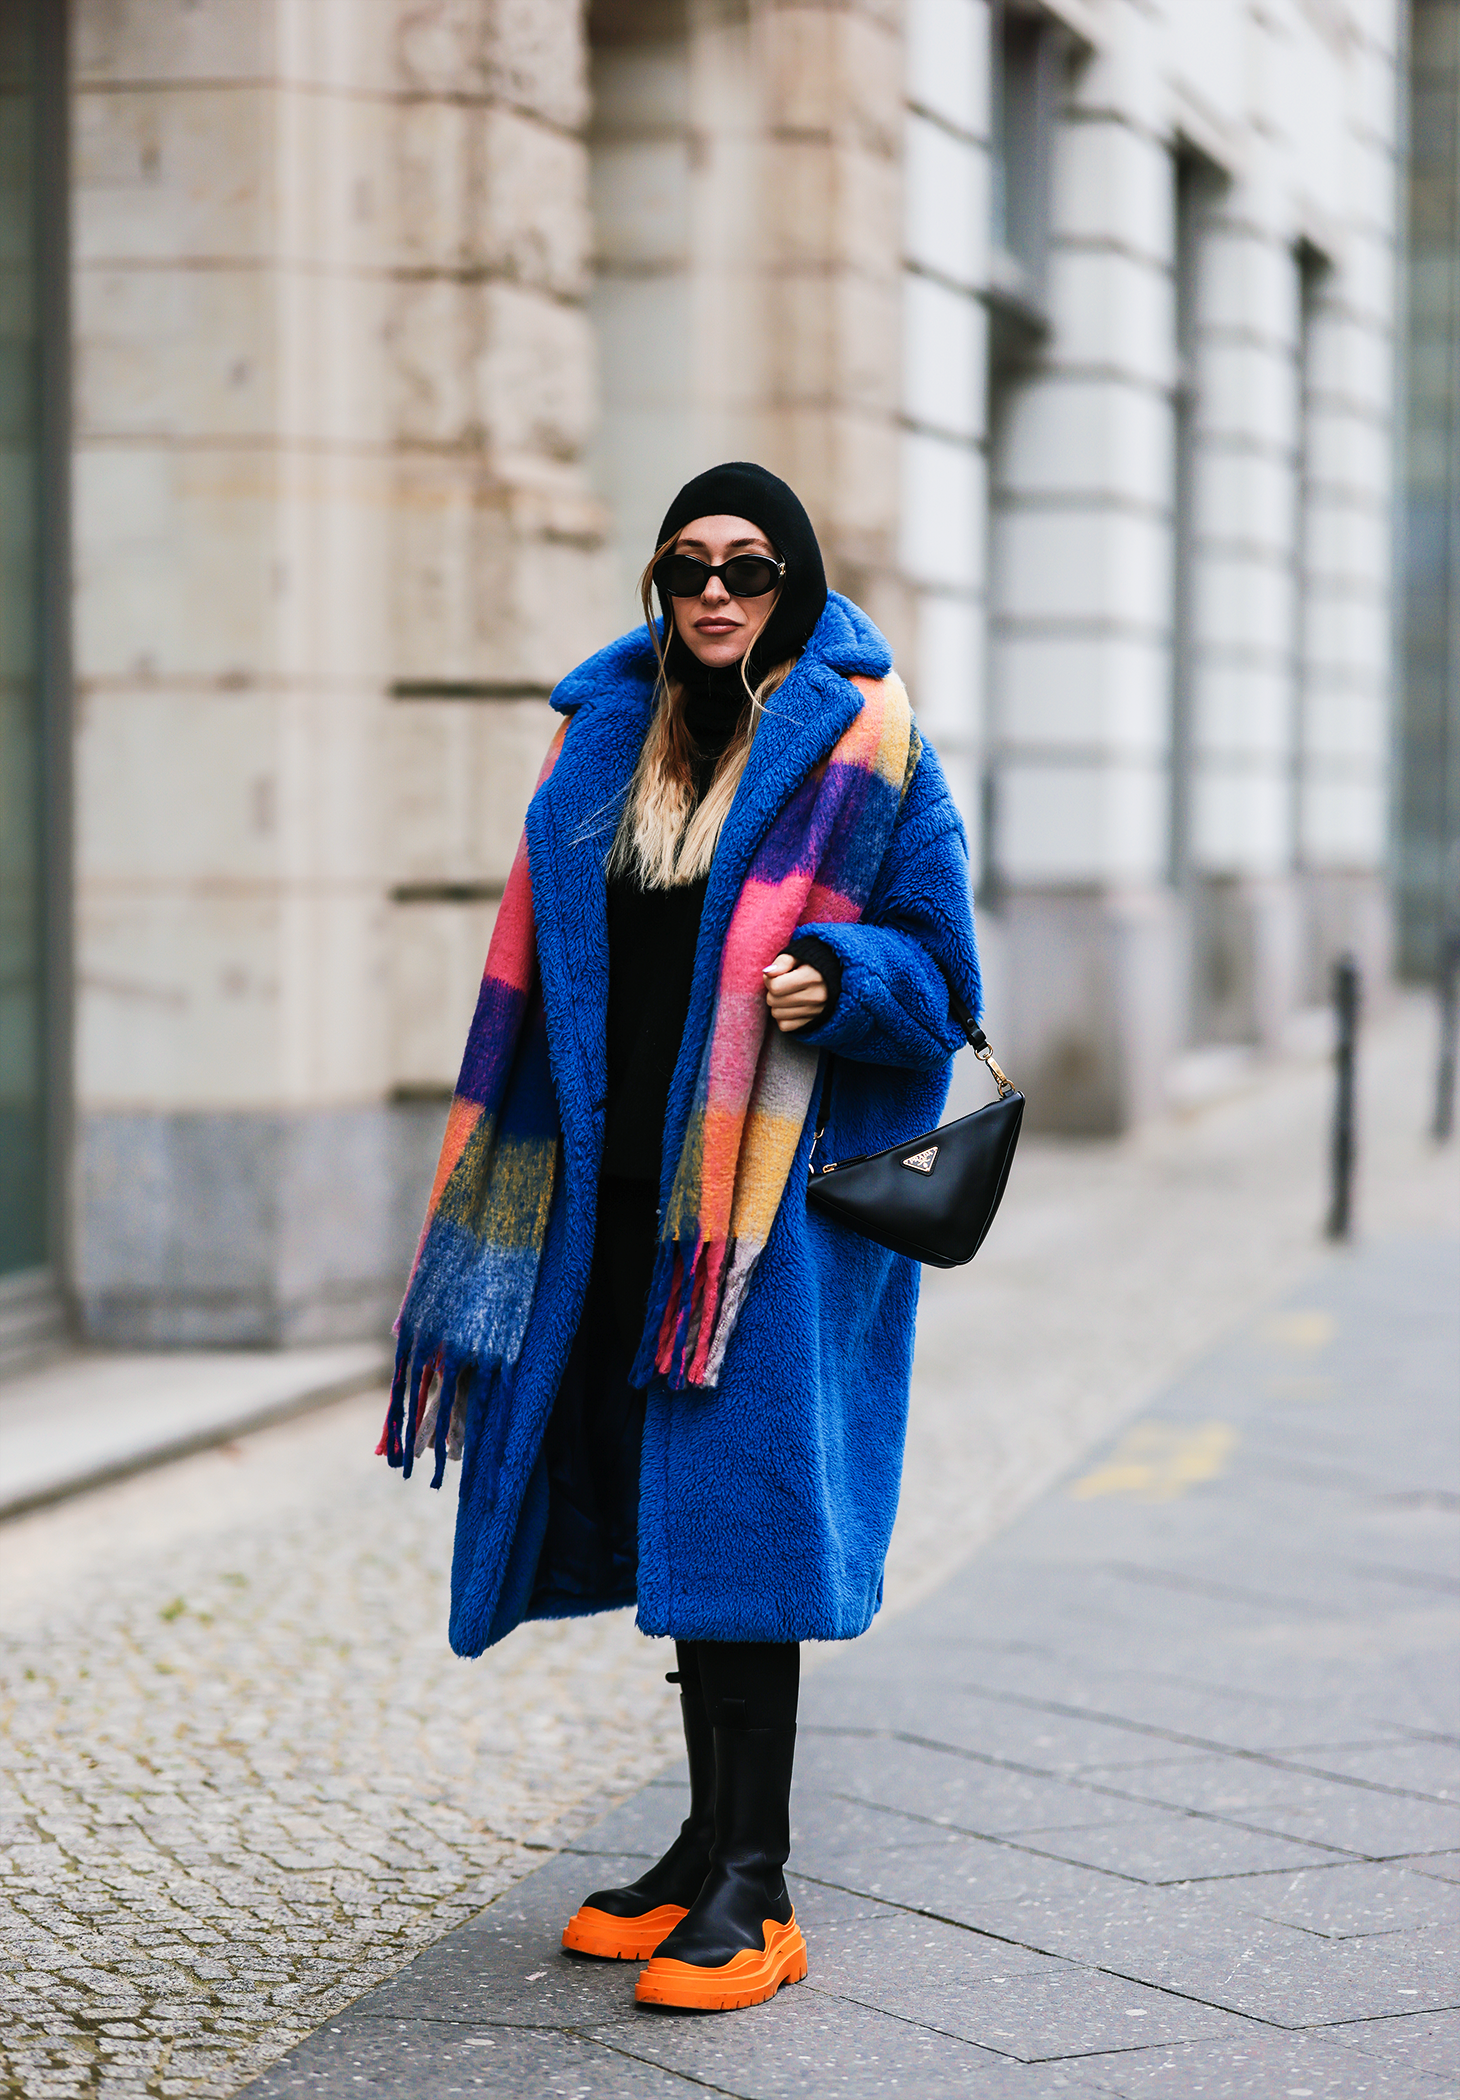 Zara January sale 2022: Best deals to shop on coats, dresses, bags